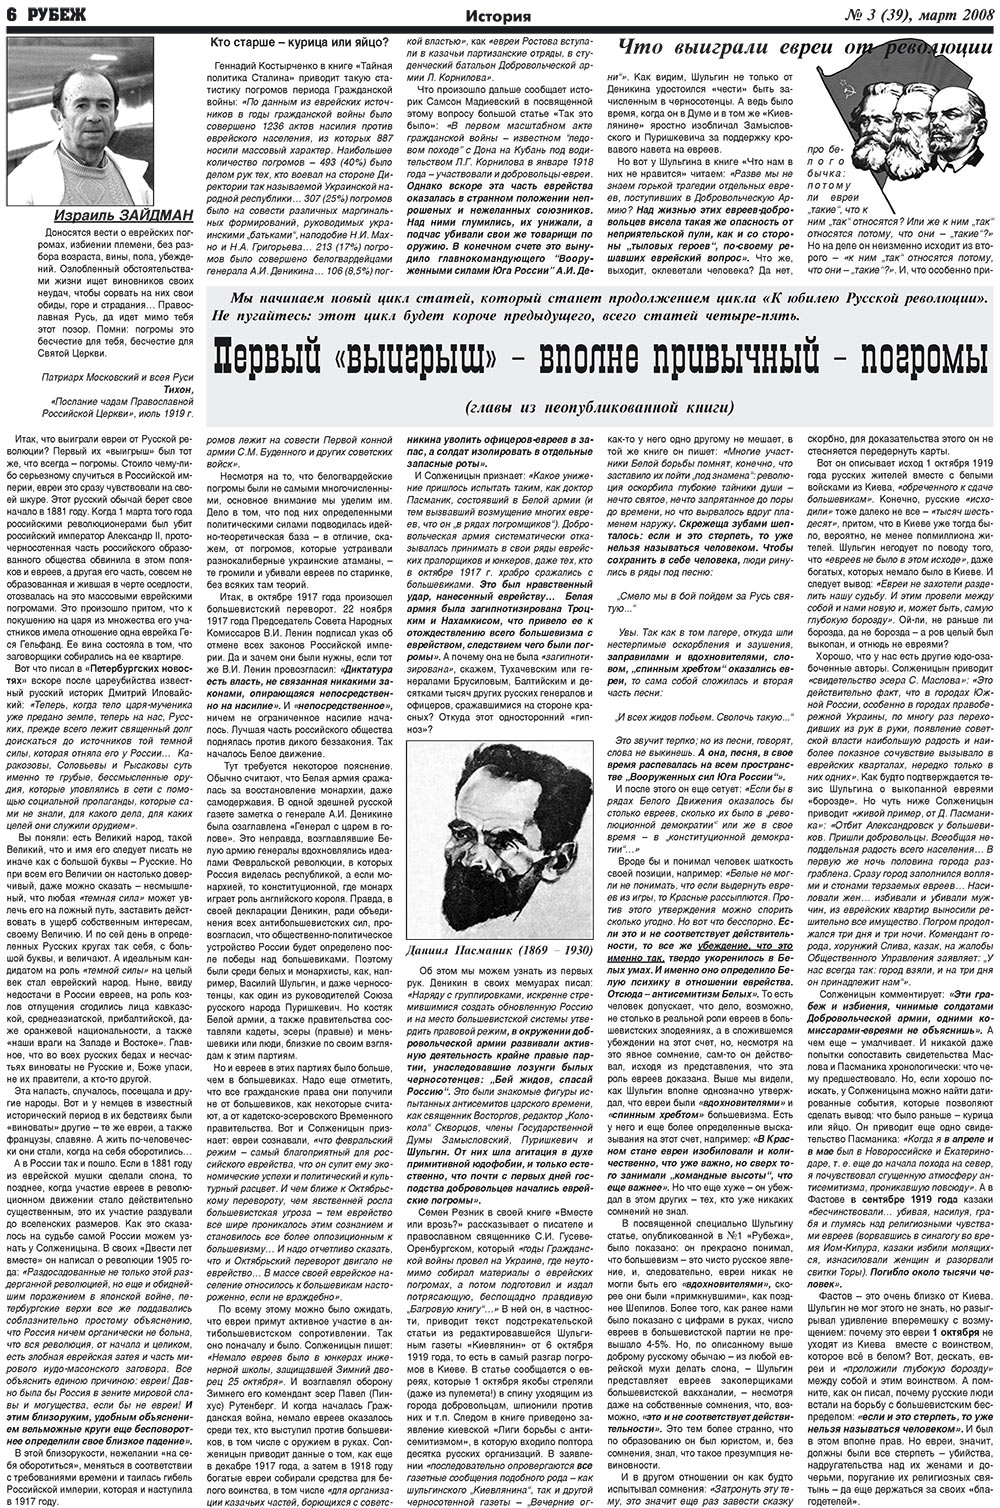 Рубеж, газета. 2008 №3 стр.6